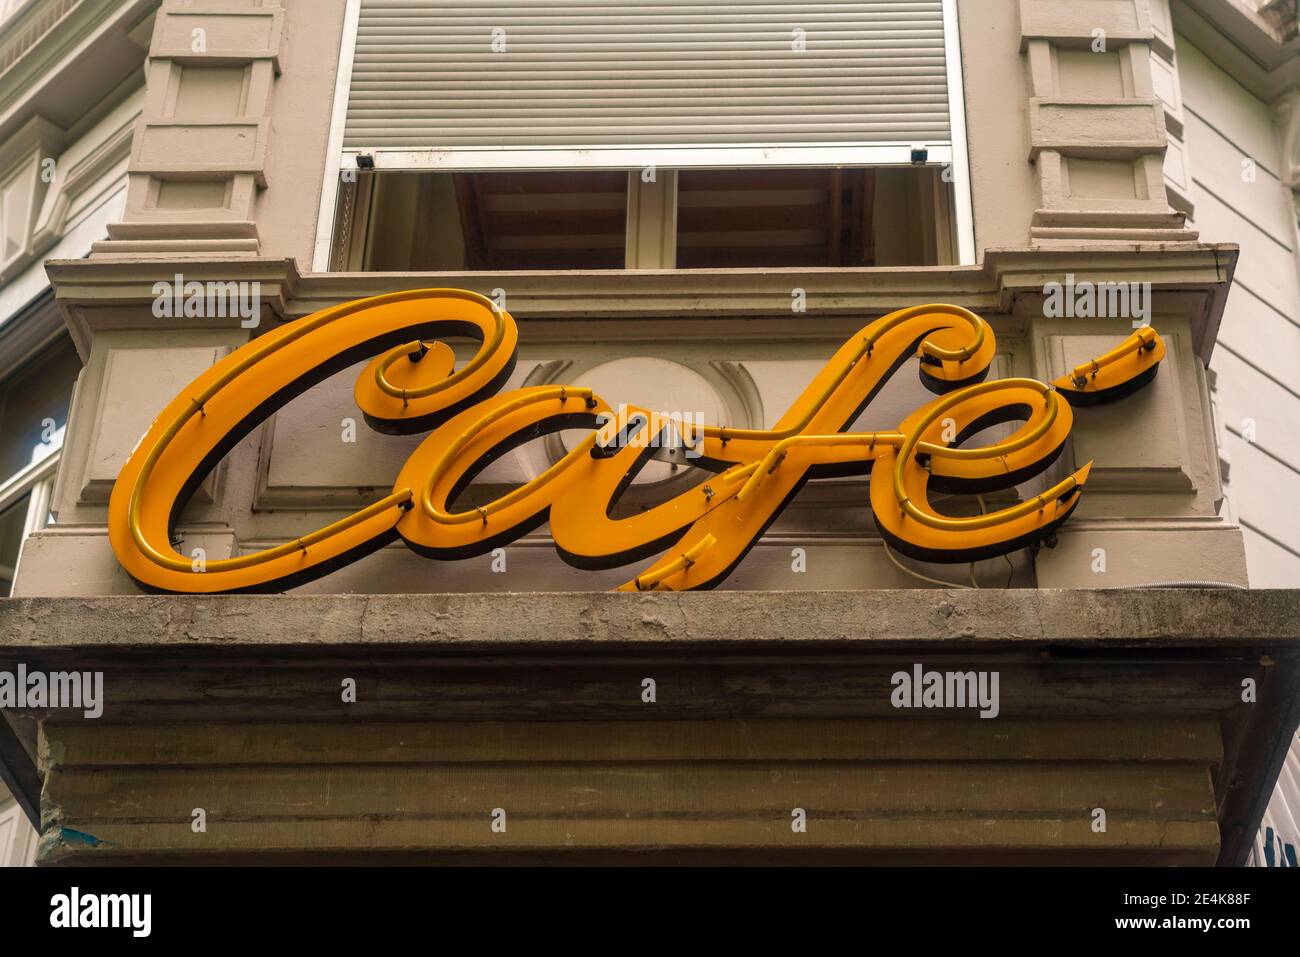 Switzerland, Zurich, Vintage Cafe neon sign on building Stock Photo - Alamy